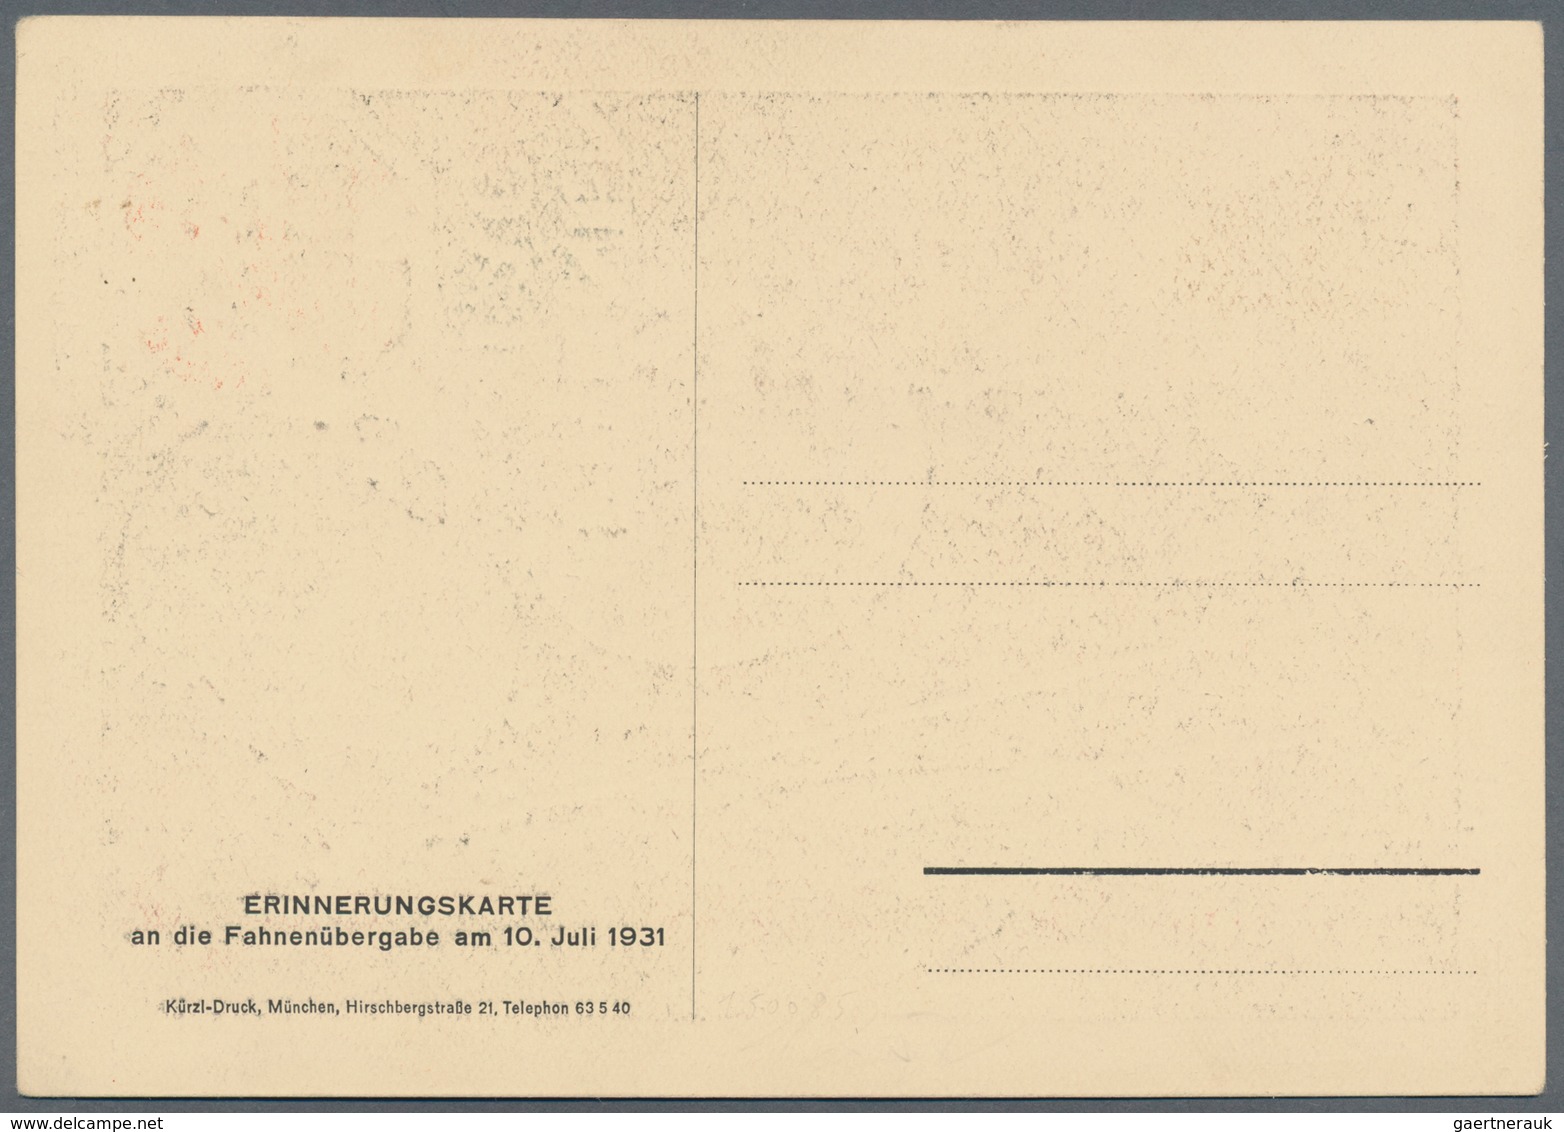 Ansichtskarten: Propaganda: 1931 Freiheit-Ehre - Fahnentag / Freedom And Honour = Flag [Colors] Day: - Politieke Partijen & Verkiezingen